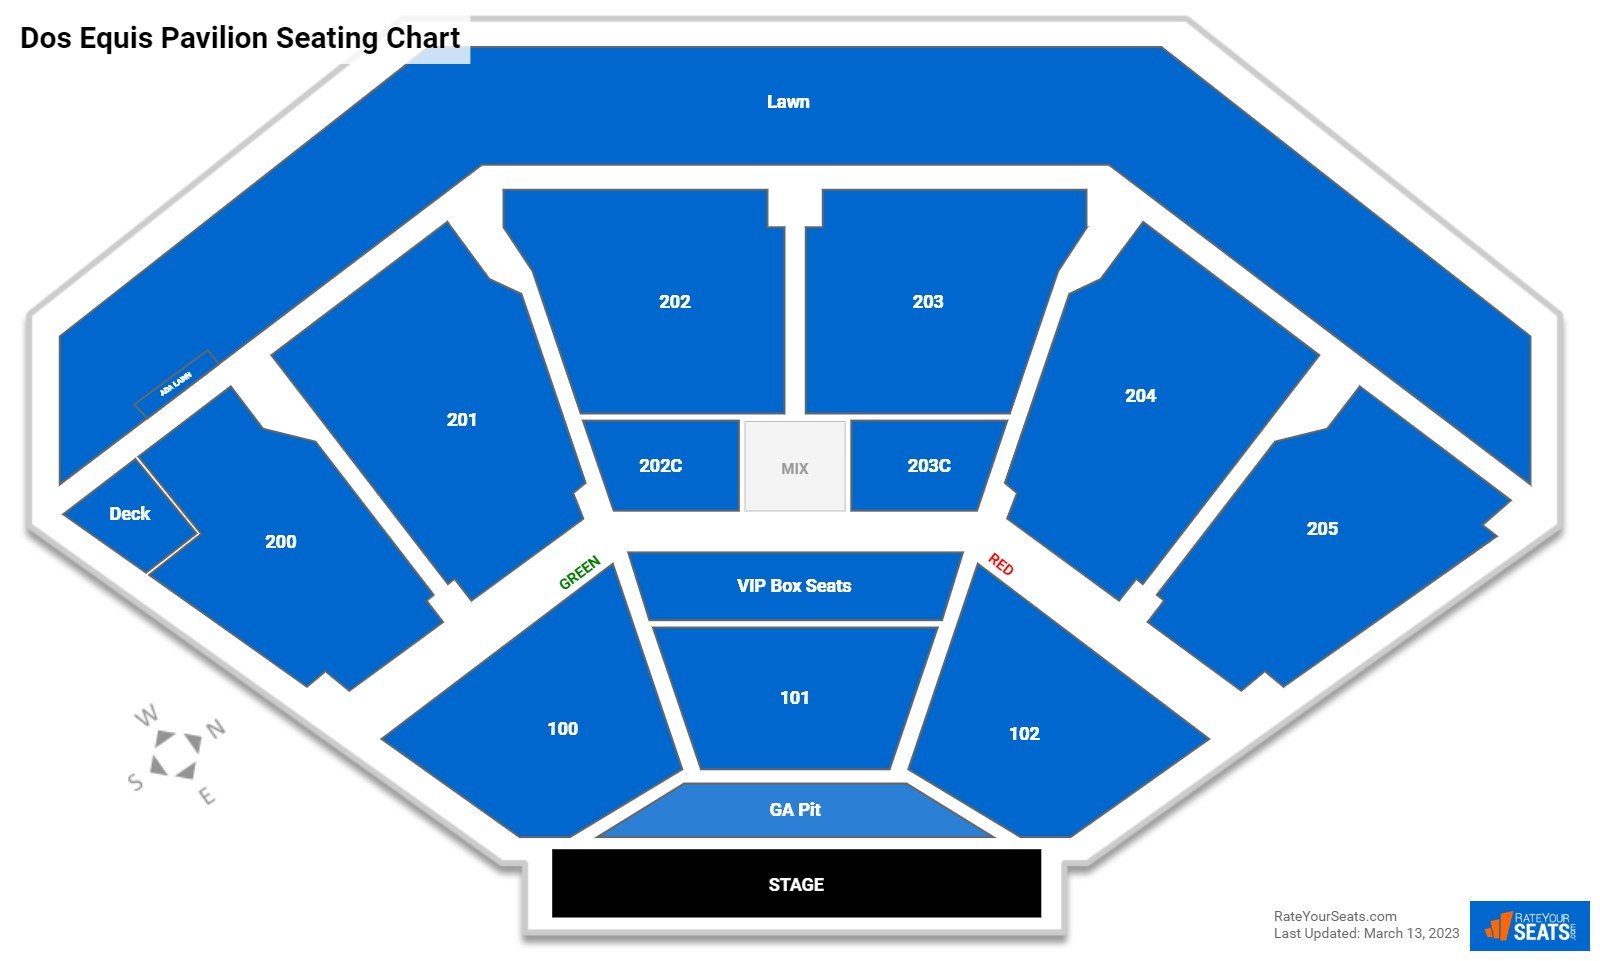 Dos Equis Pavilion Concert Seating Chart